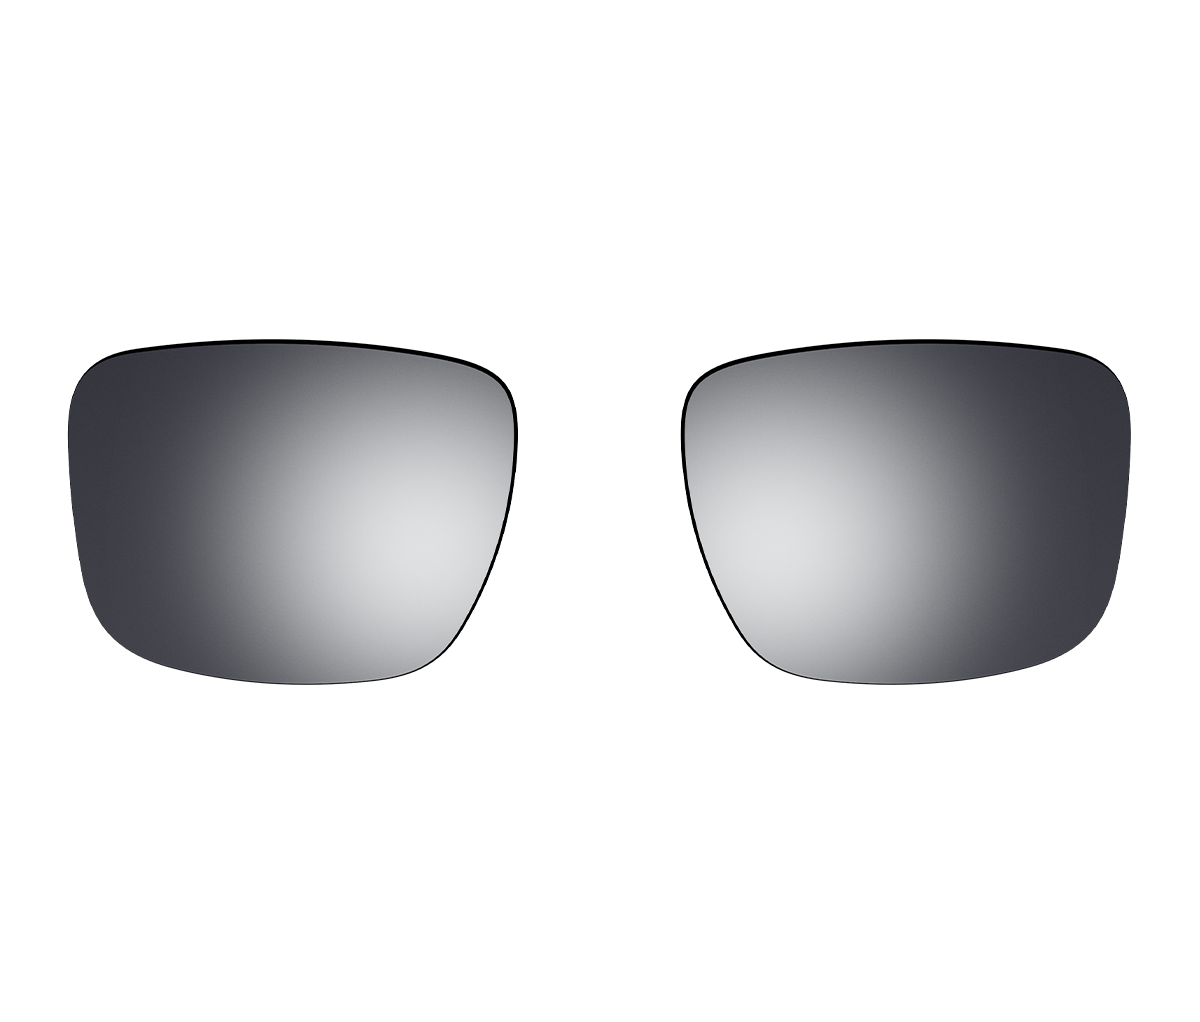 Bose Lenses Tenor style Mirrored Silver (Polarized)